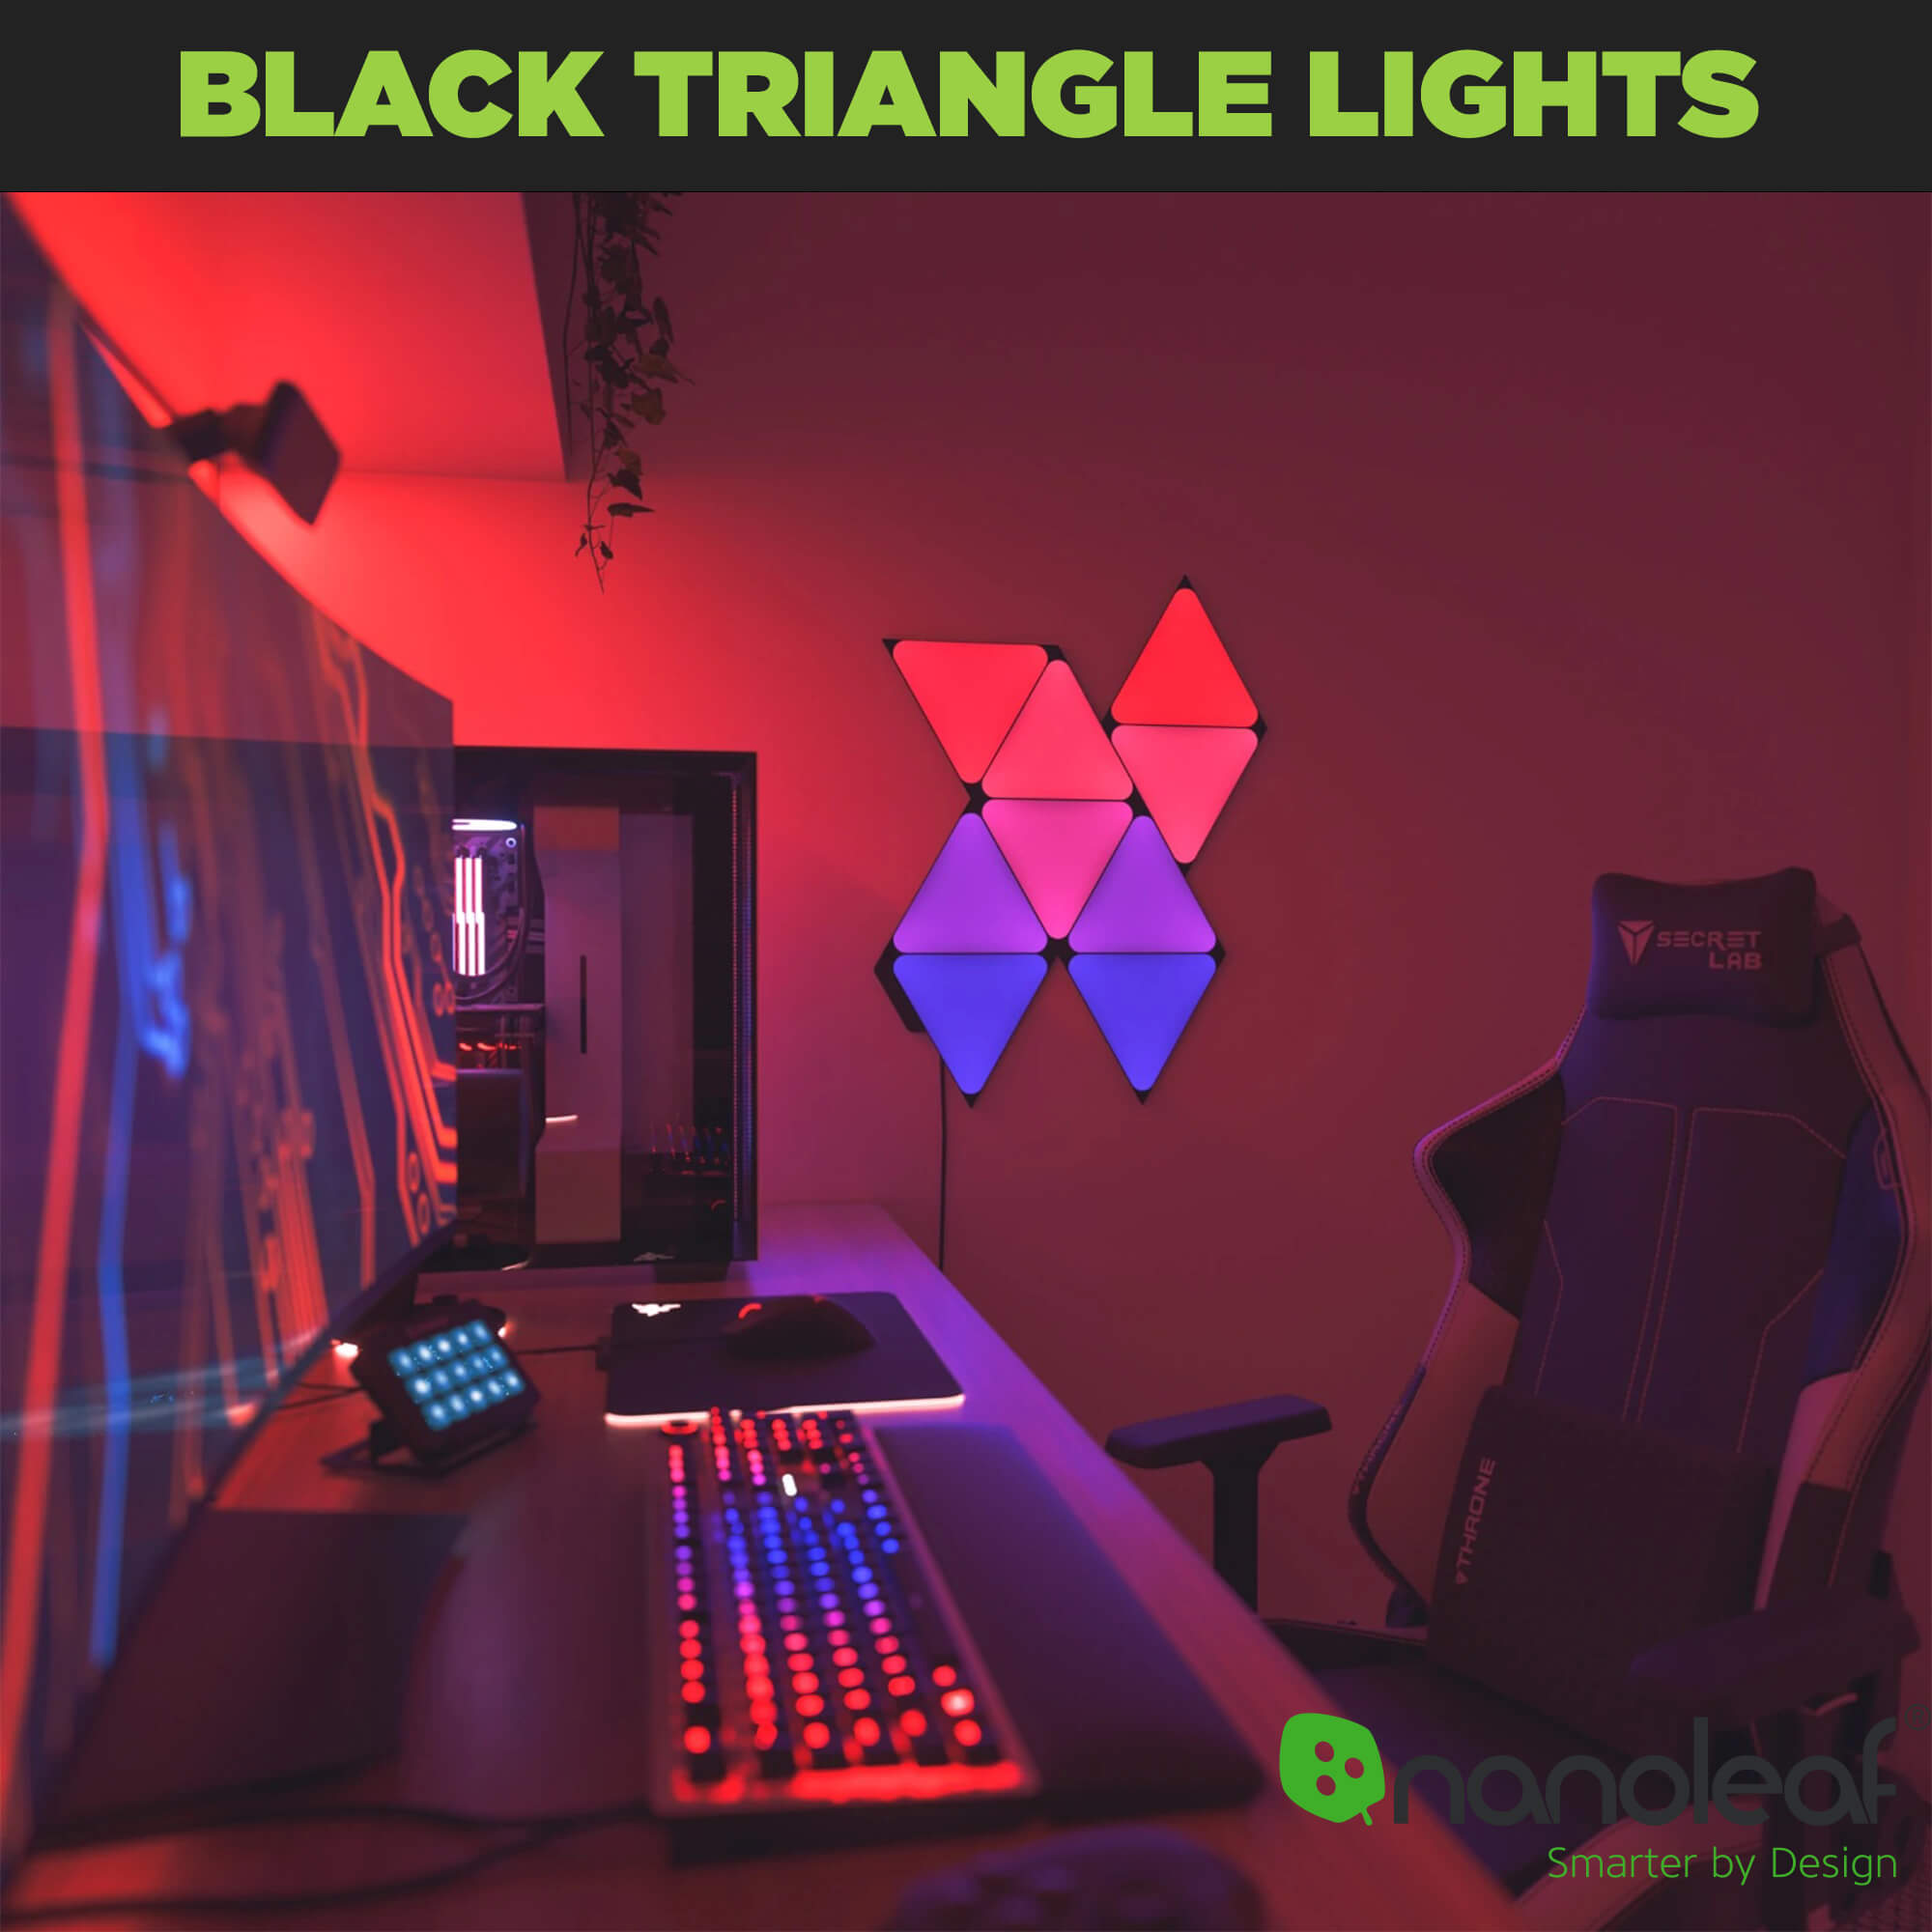 Nanoleaf black triangle lights wall mounted next to gaming desk.